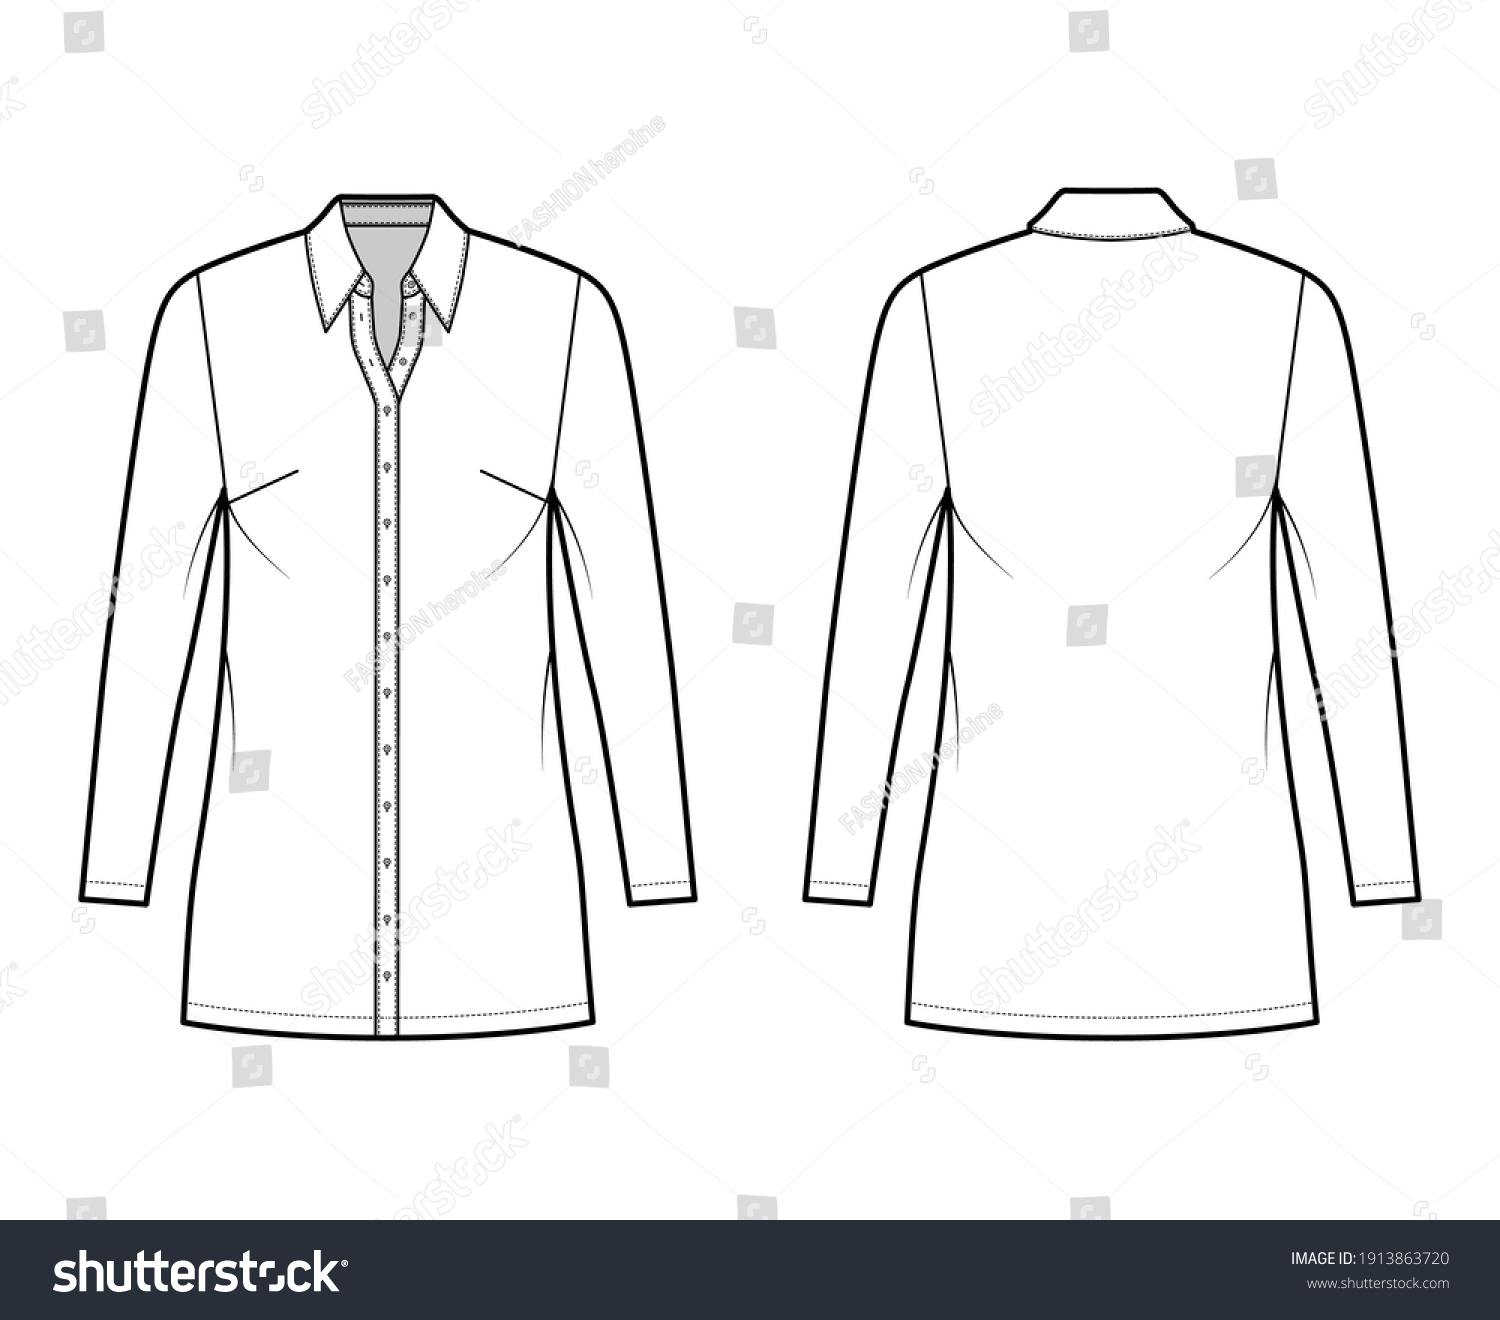 58,852 Collar shirt designs Images, Stock Photos & Vectors | Shutterstock